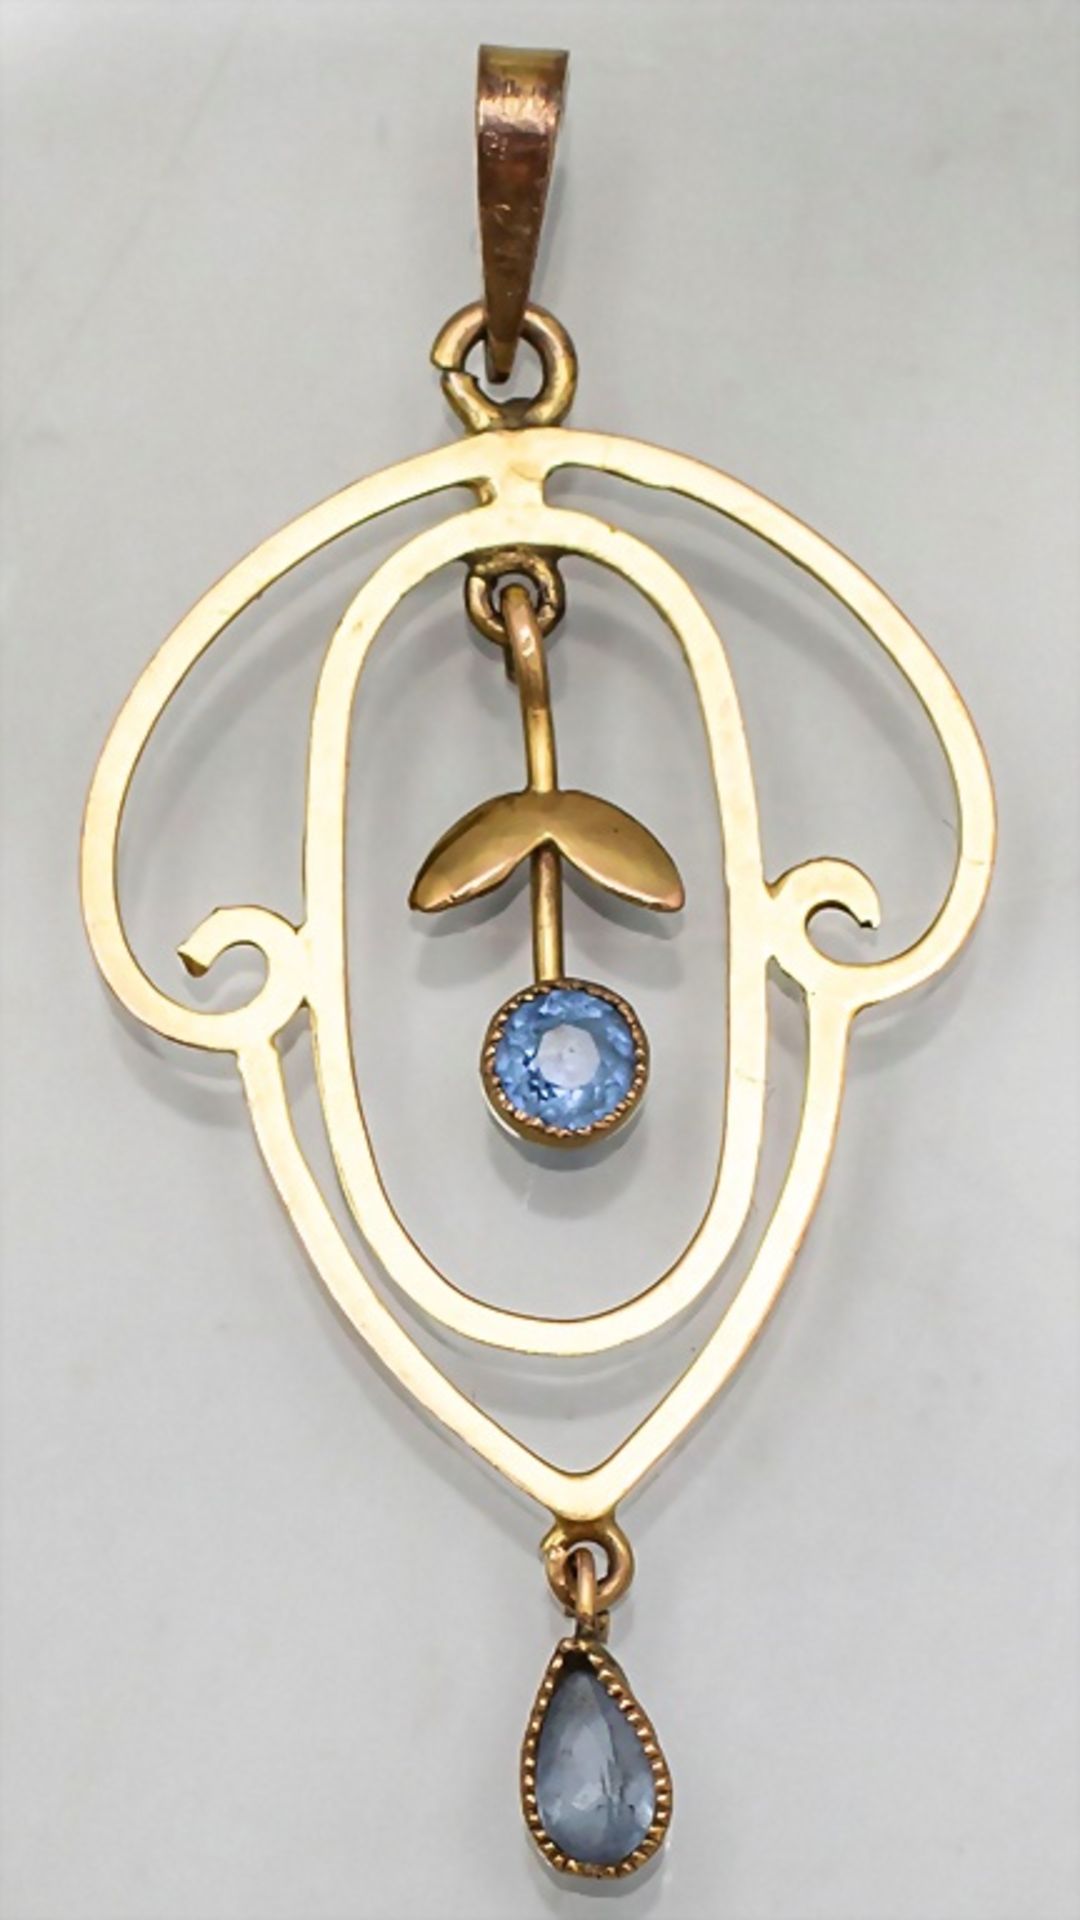 Jugendstil Anhänger / An Art Nouveau pendant, England, um 1900